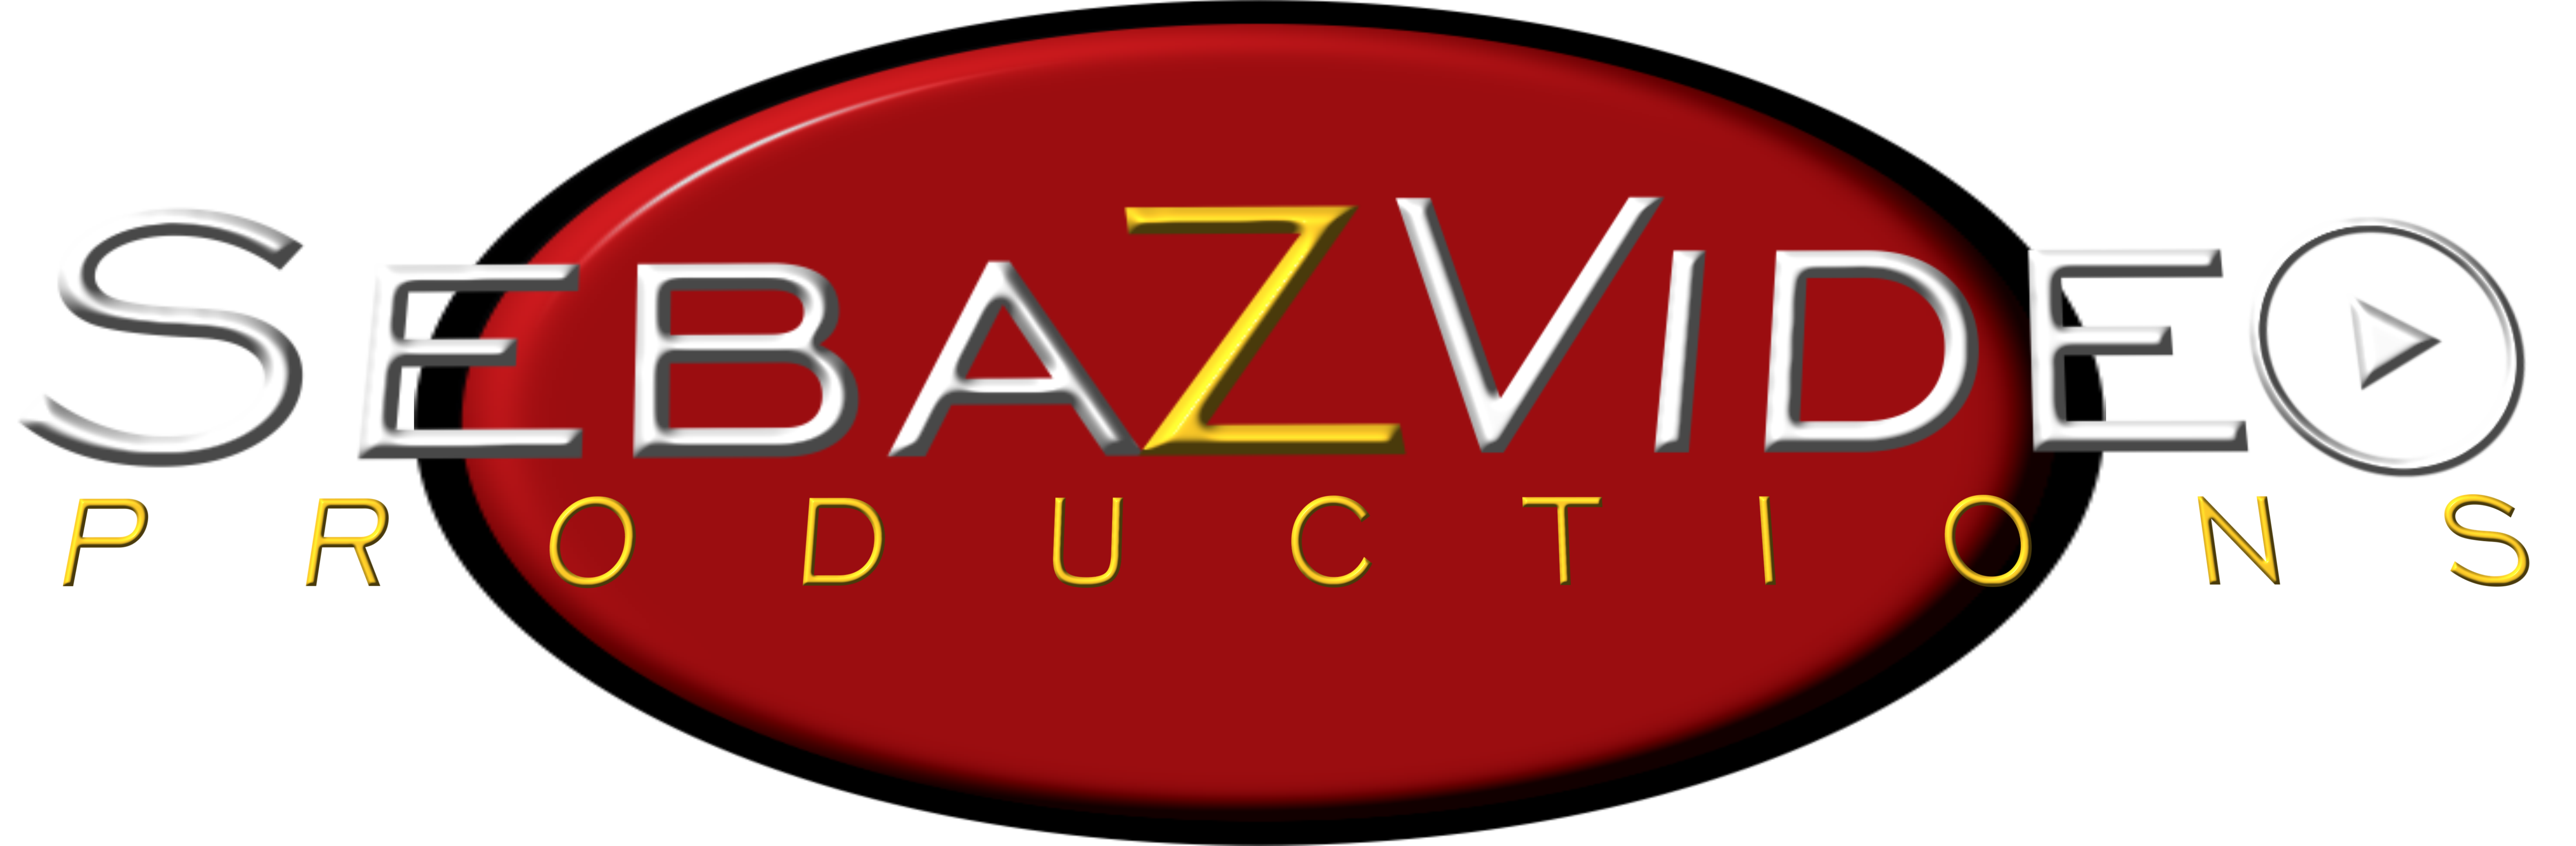 Sebaz Productions